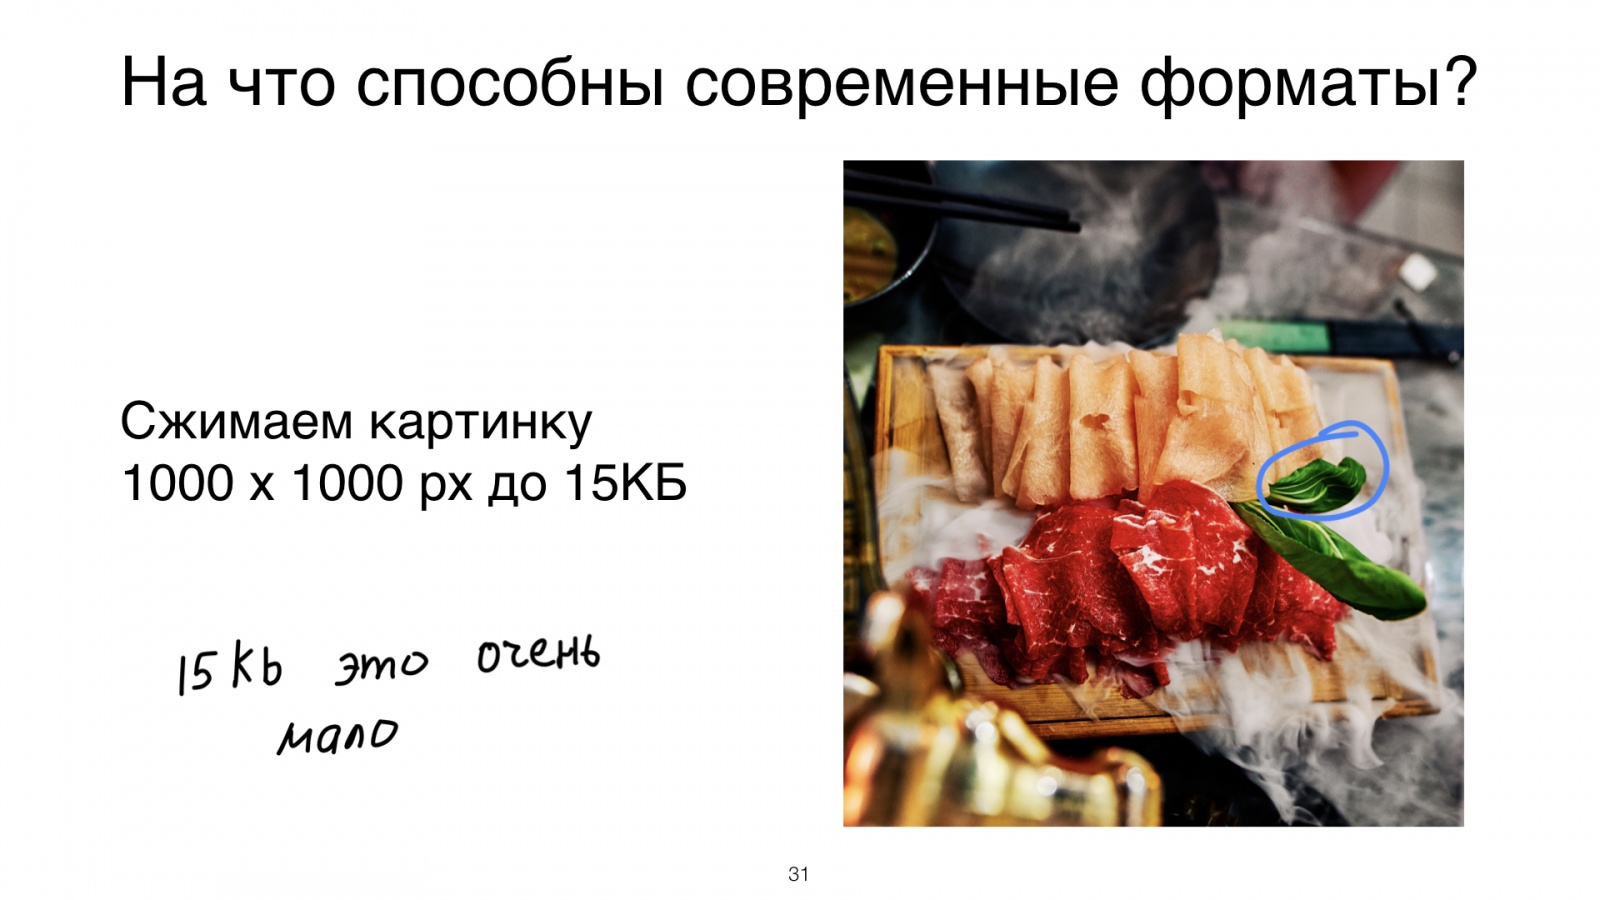 Картинки как коробки — что внутри? Доклад в Яндексе - 32